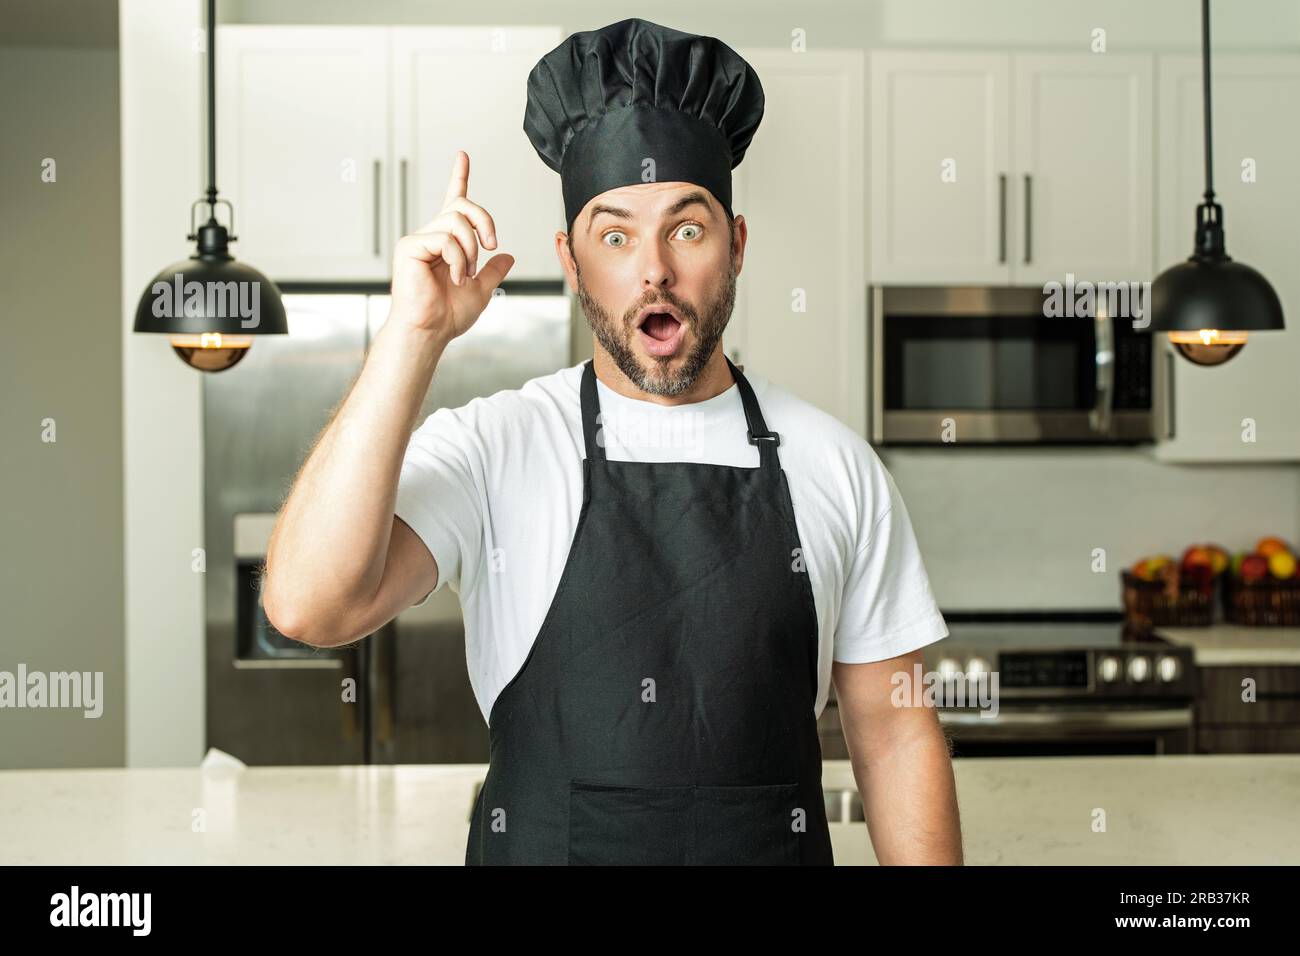 Uomo in cuoco grembiule cucina Foto stock - Alamy